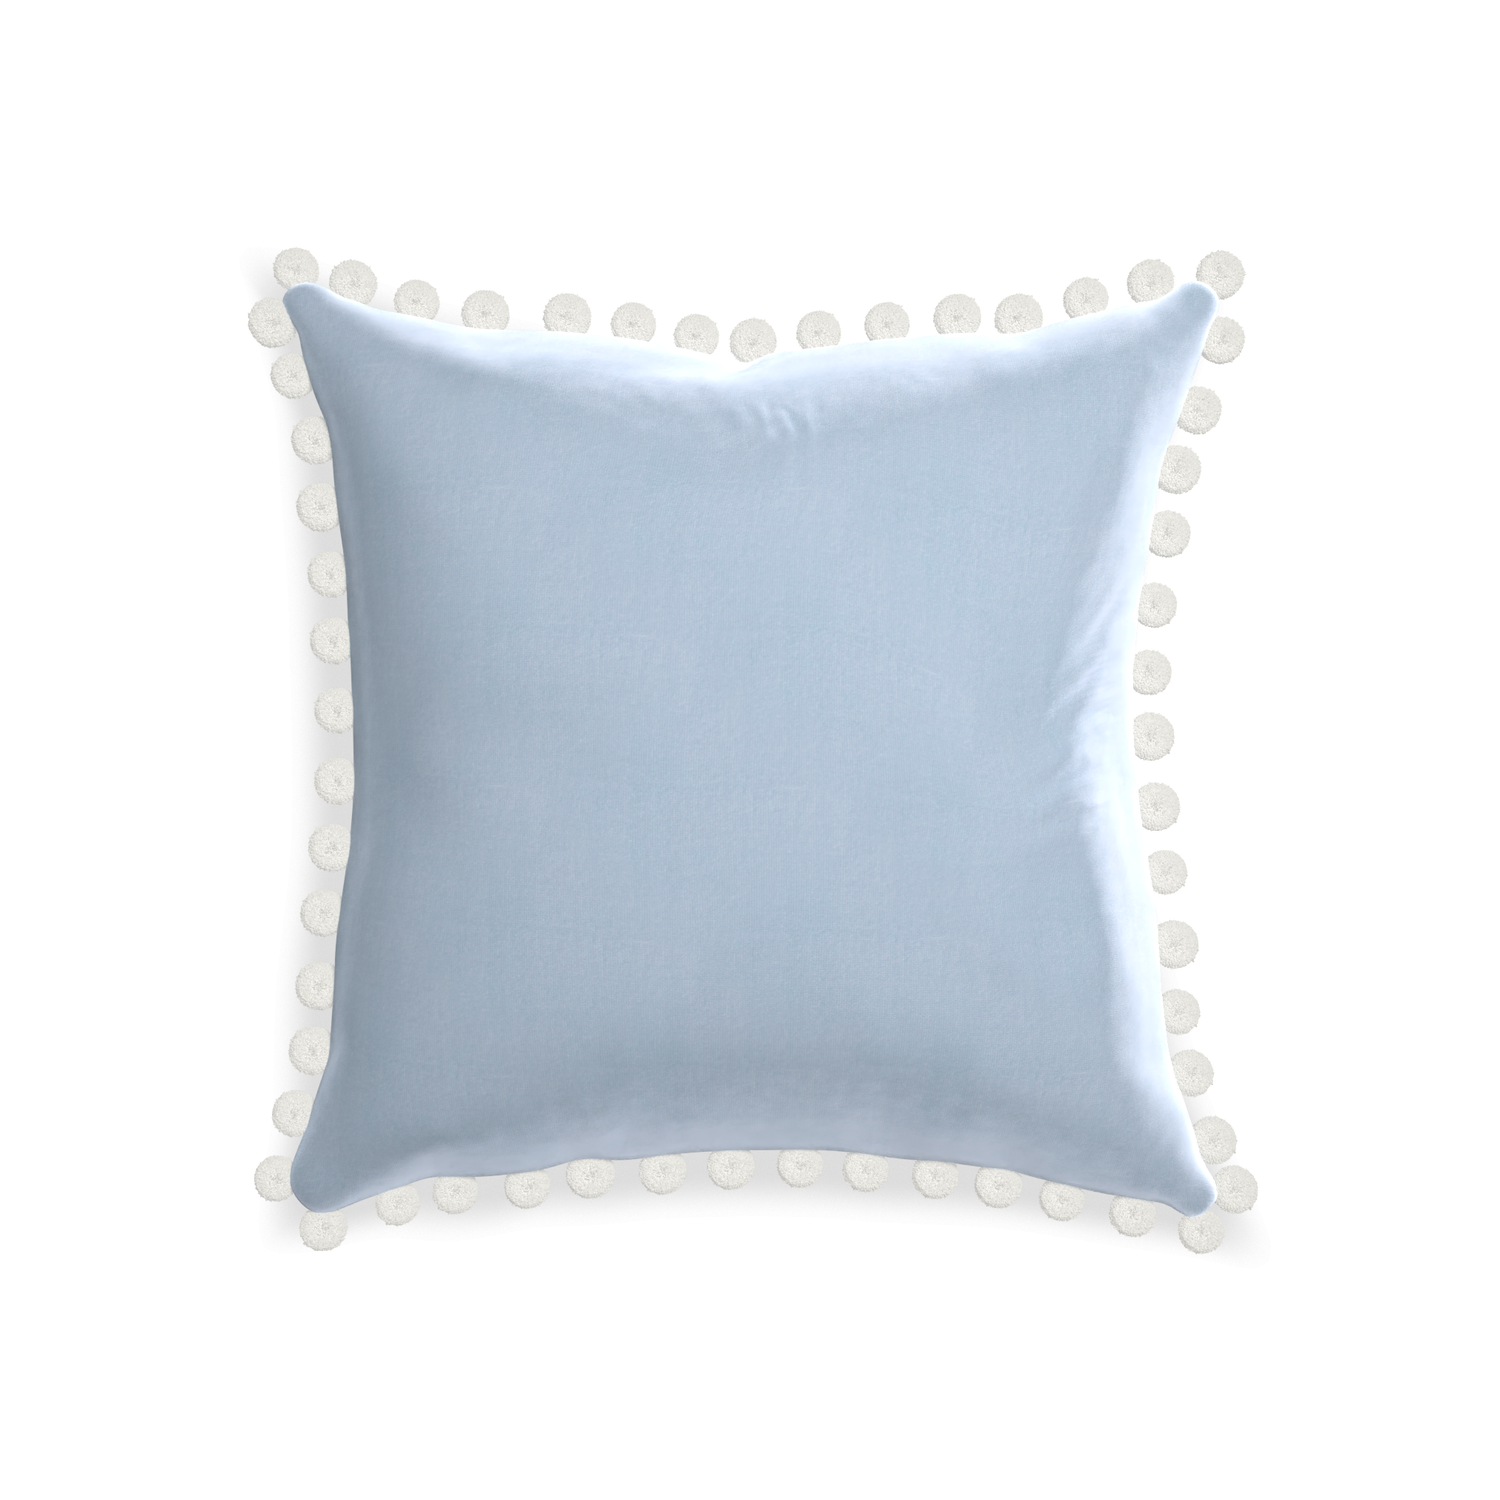 20-square sky velvet custom pillow with snow pom pom on white background